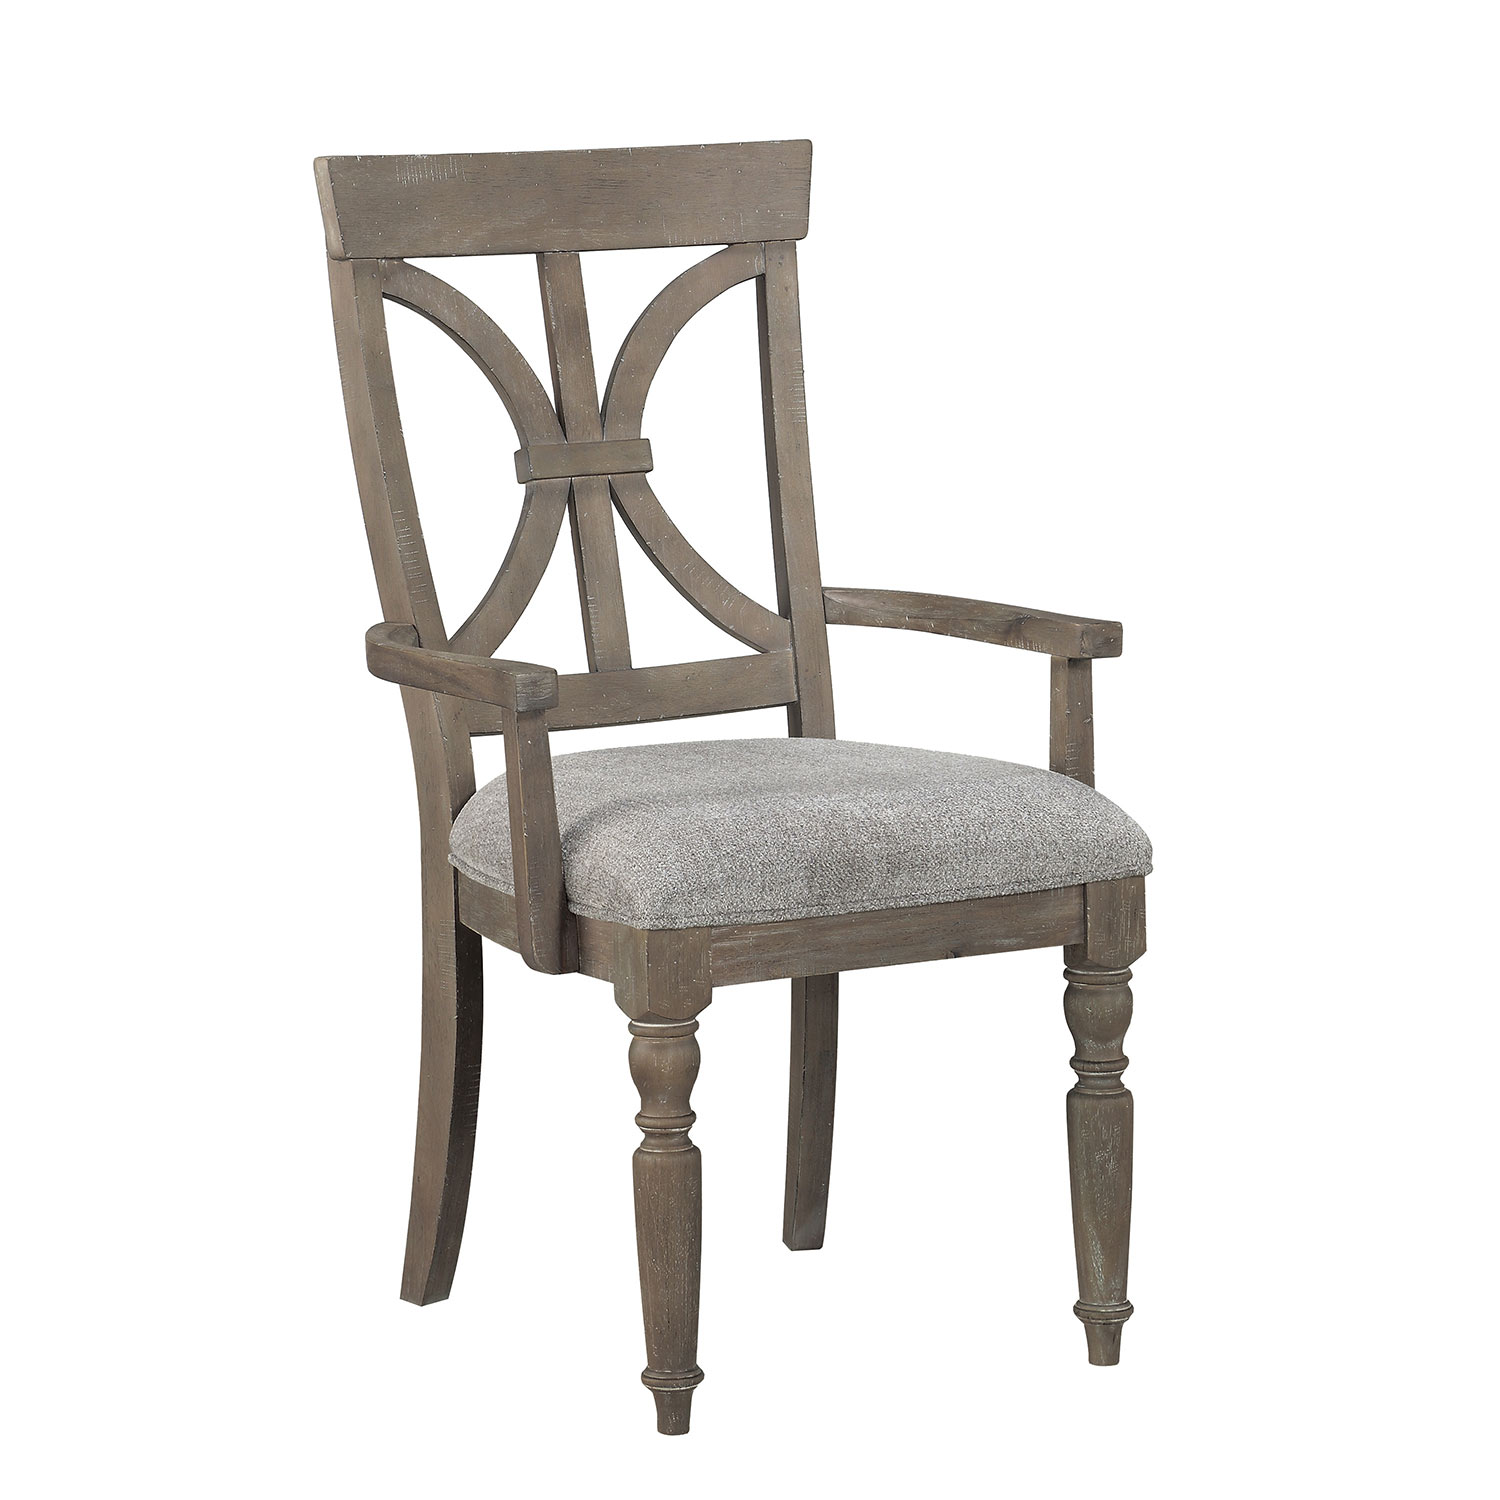 Homelegance Cardano Arm Chair - Driftwood Light Brown